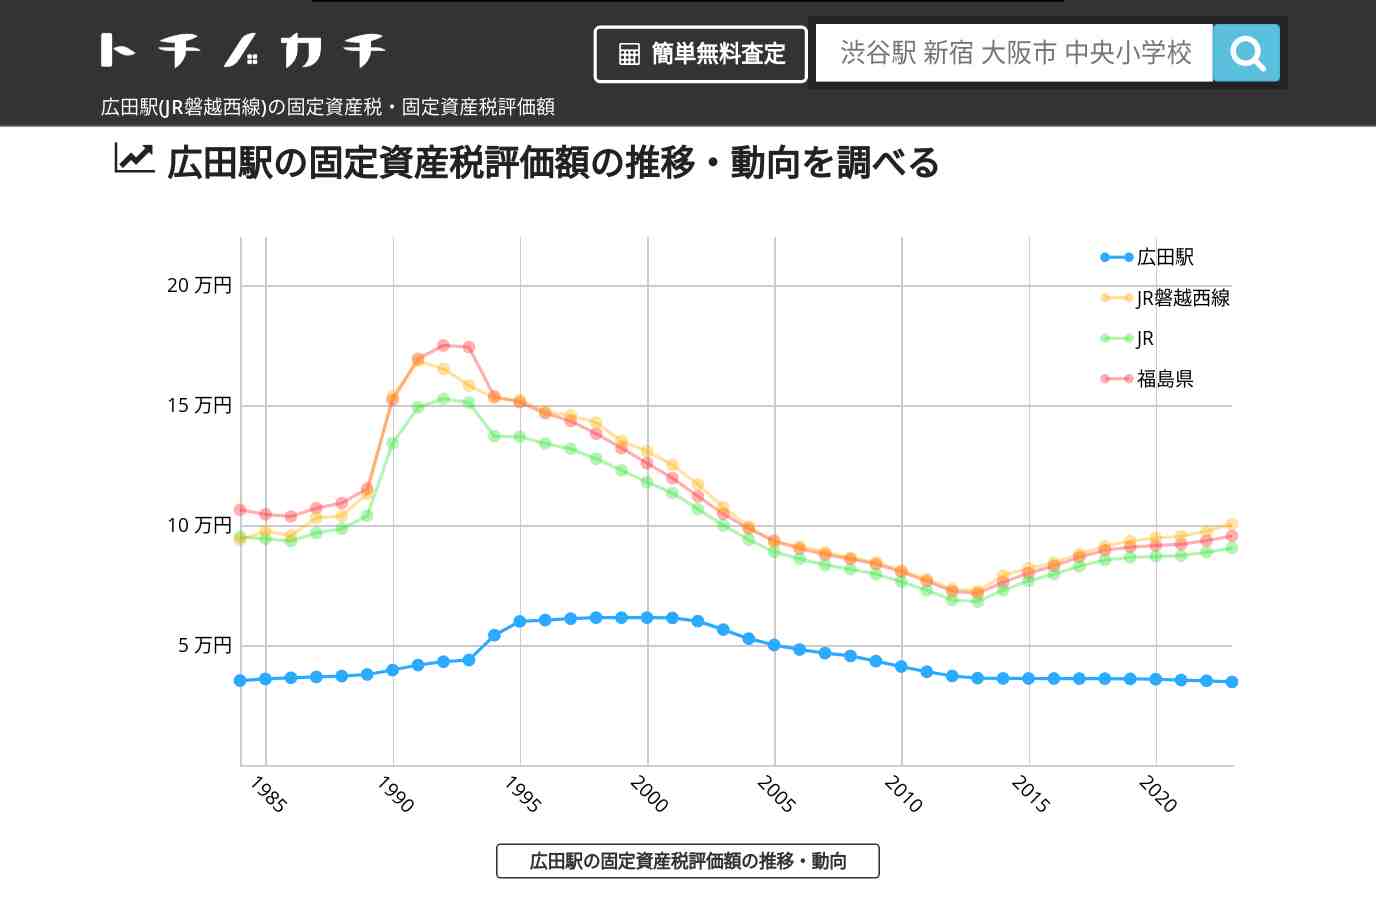 広田駅(JR磐越西線)の固定資産税・固定資産税評価額 | トチノカチ